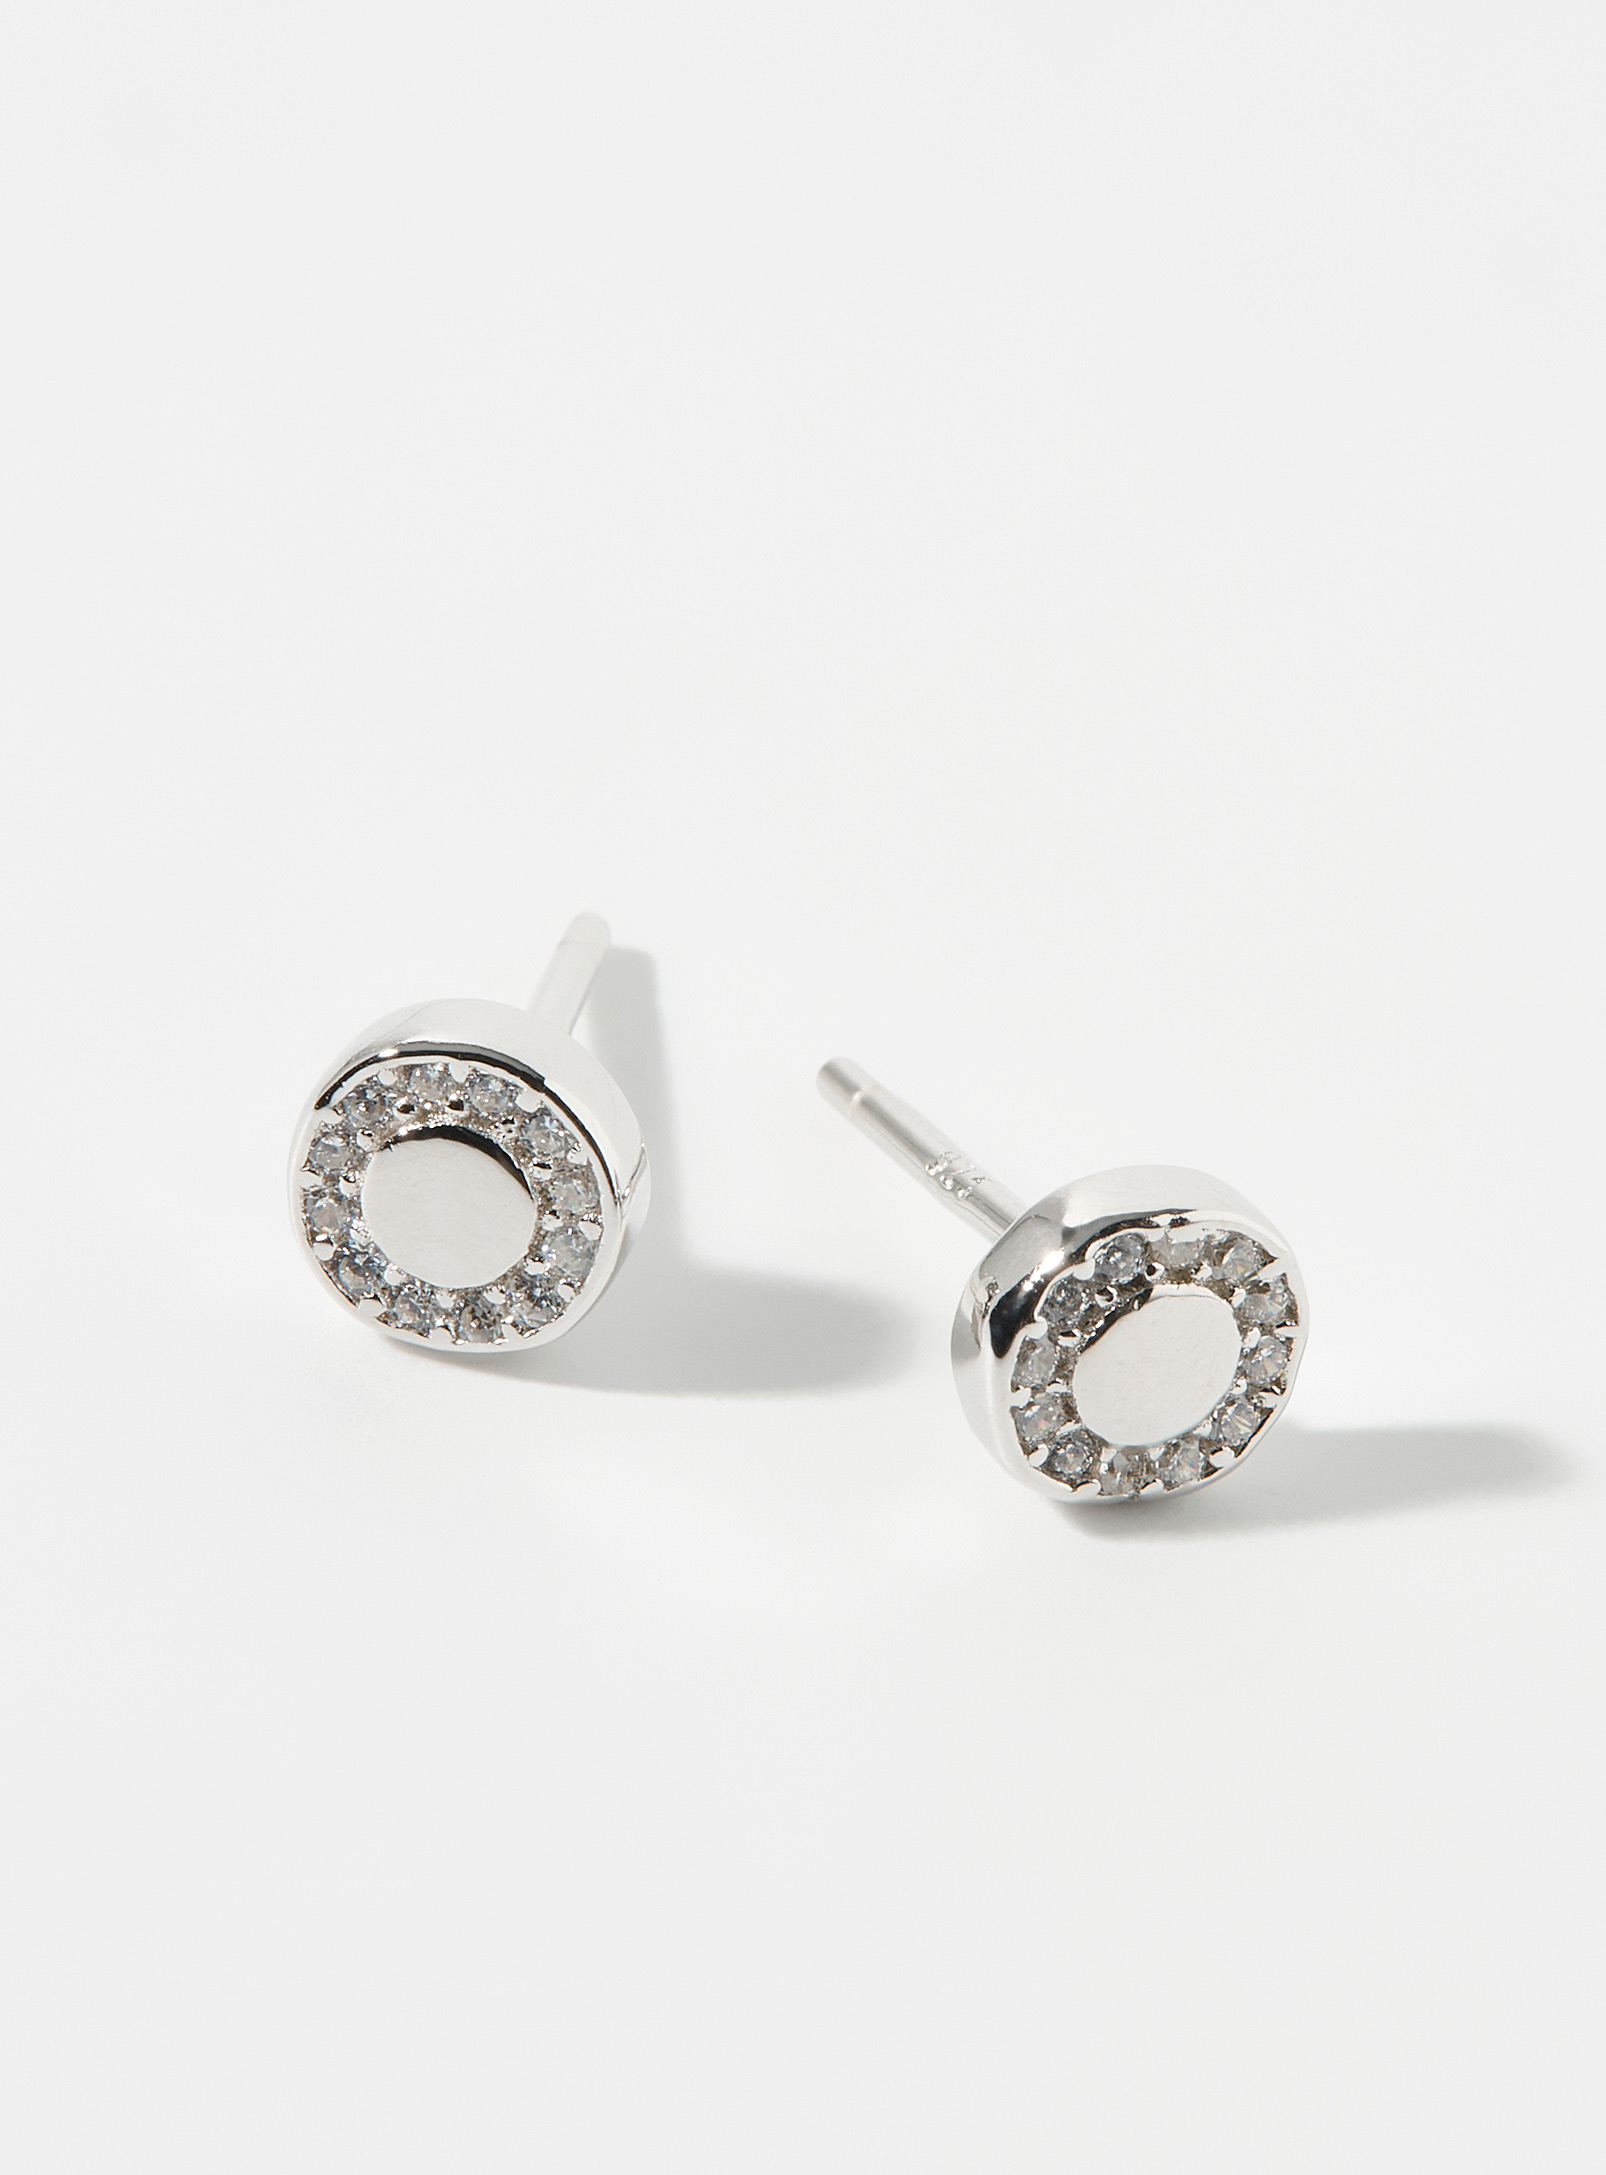 Simons - Women's Small circular silver earrings